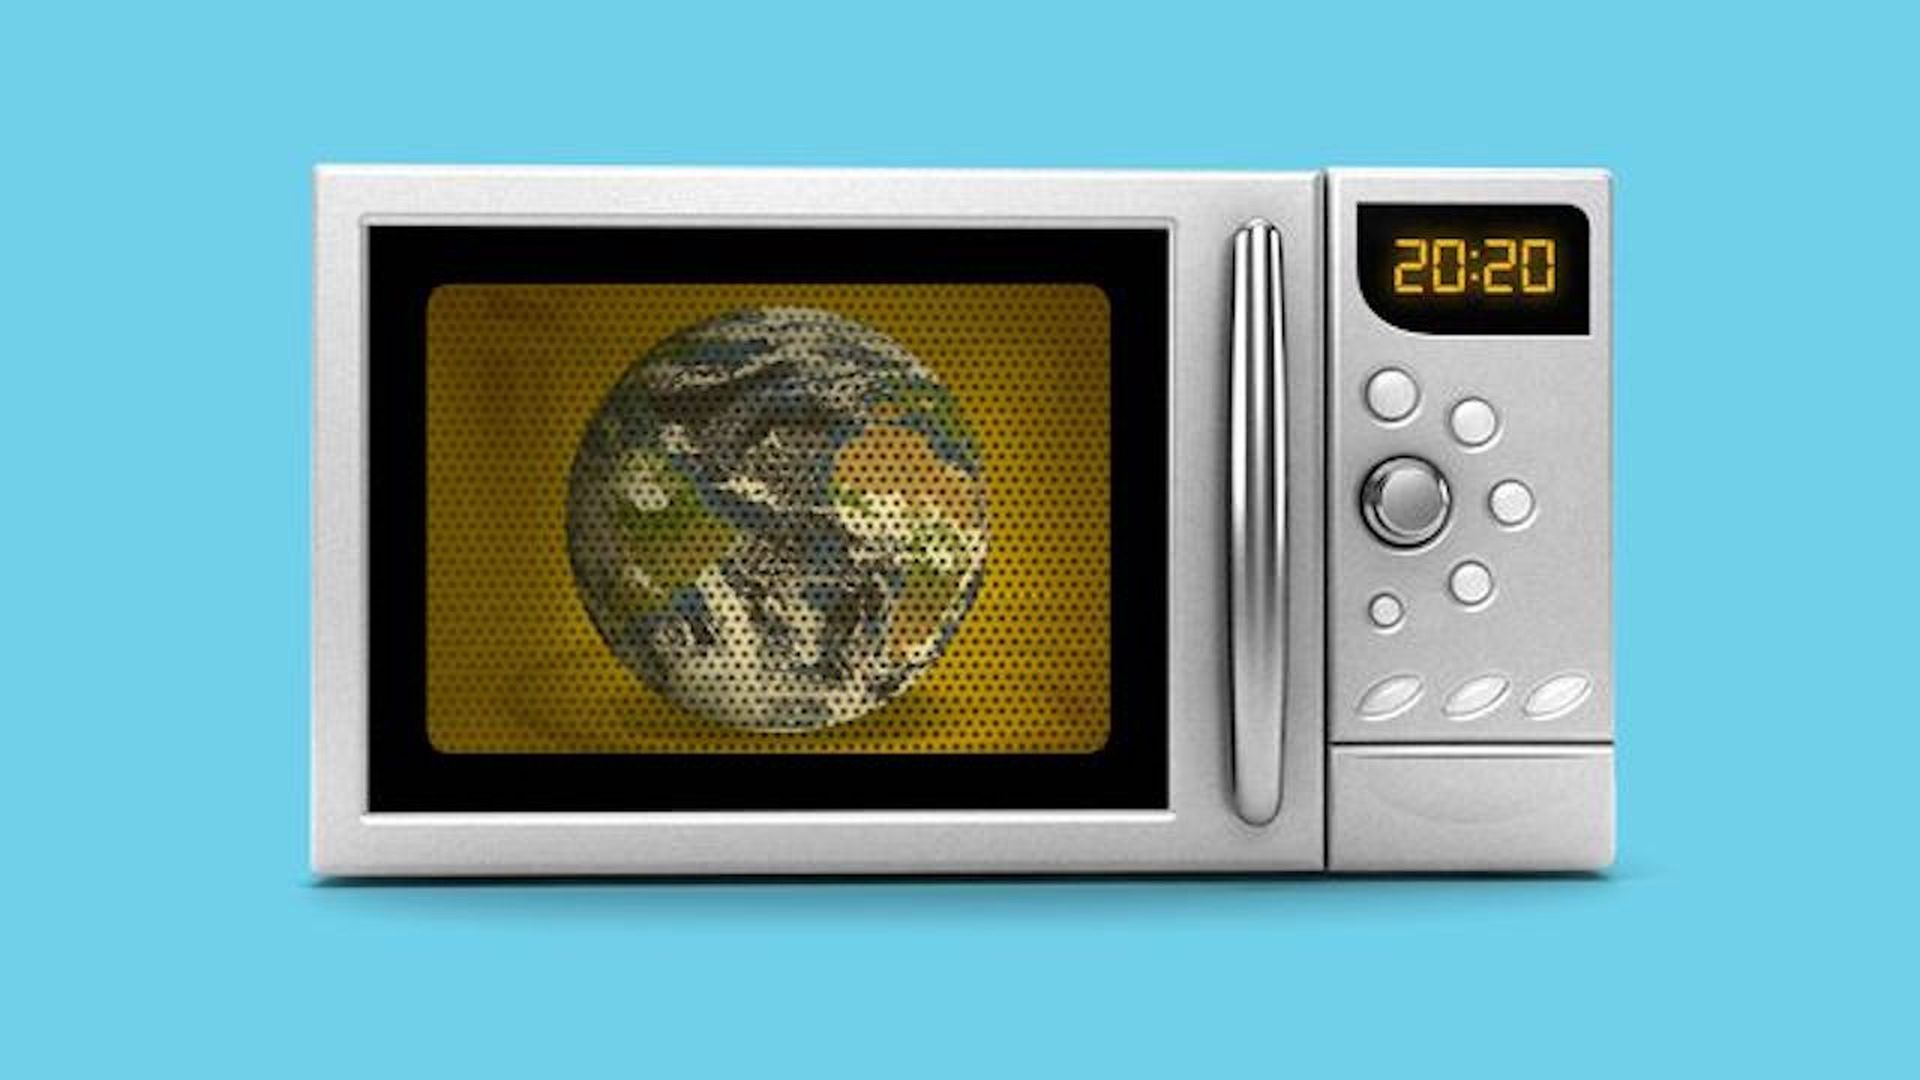 Earth inside a microwave illustration